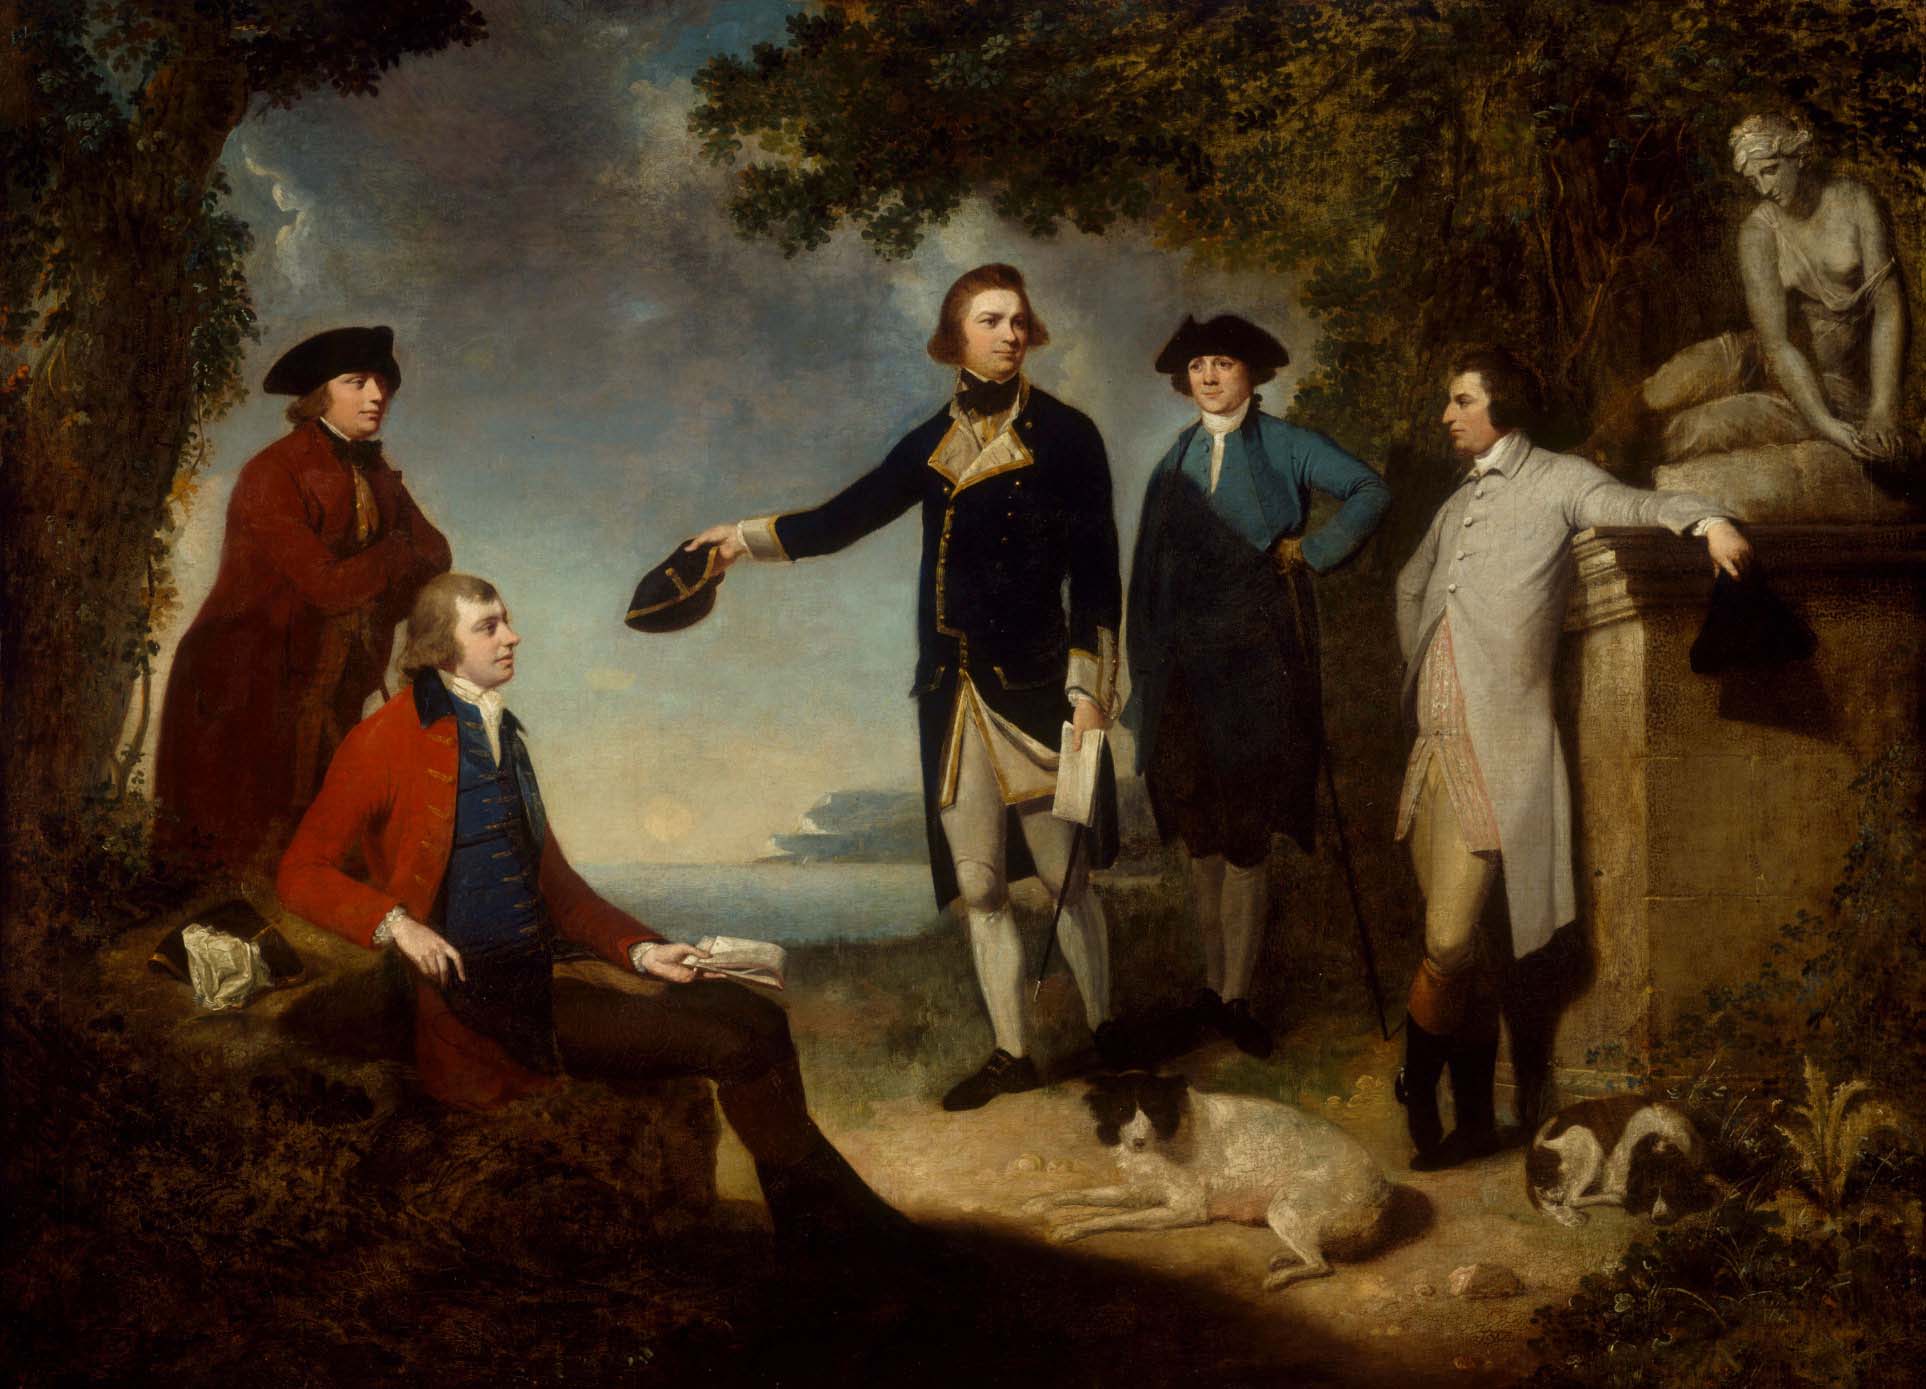 Dr Daniel Solander, Sir Joseph Banks, Captain James Cook, Dr John Hawkesworth and Lord Sandwich by John Hamilton Mortimer, 1771.